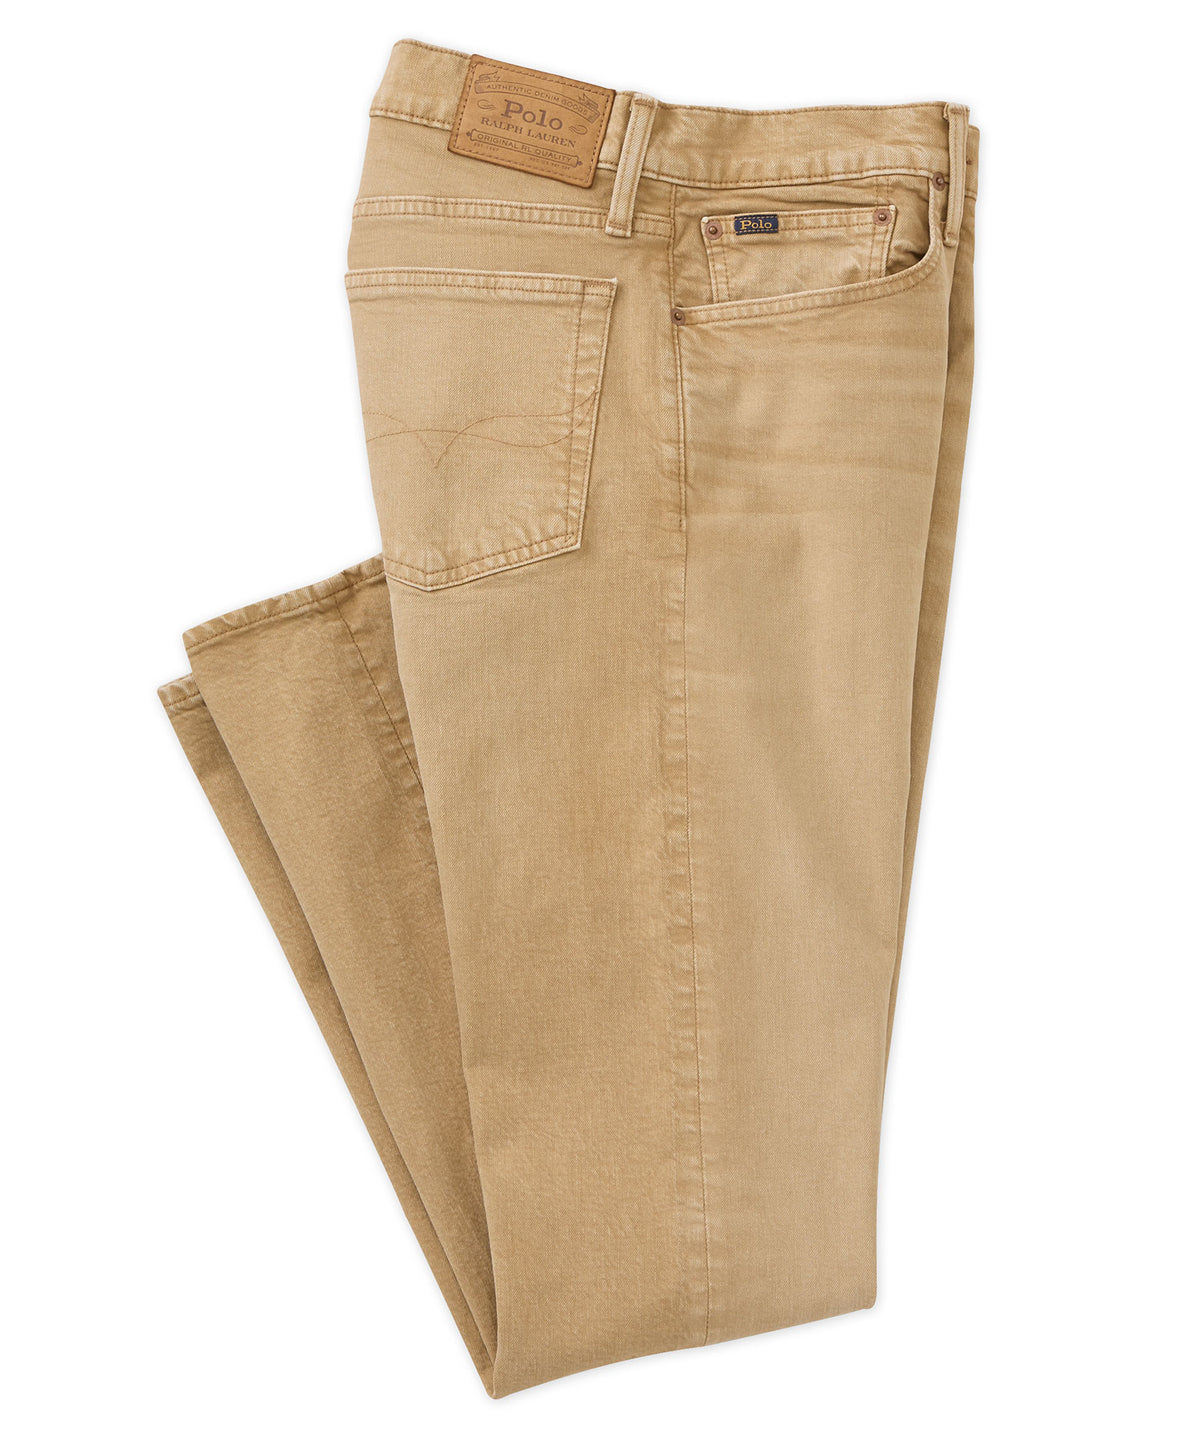 Polo Ralph Lauren Stretch Denim 5-Pocket Jeans, Men's Big & Tall